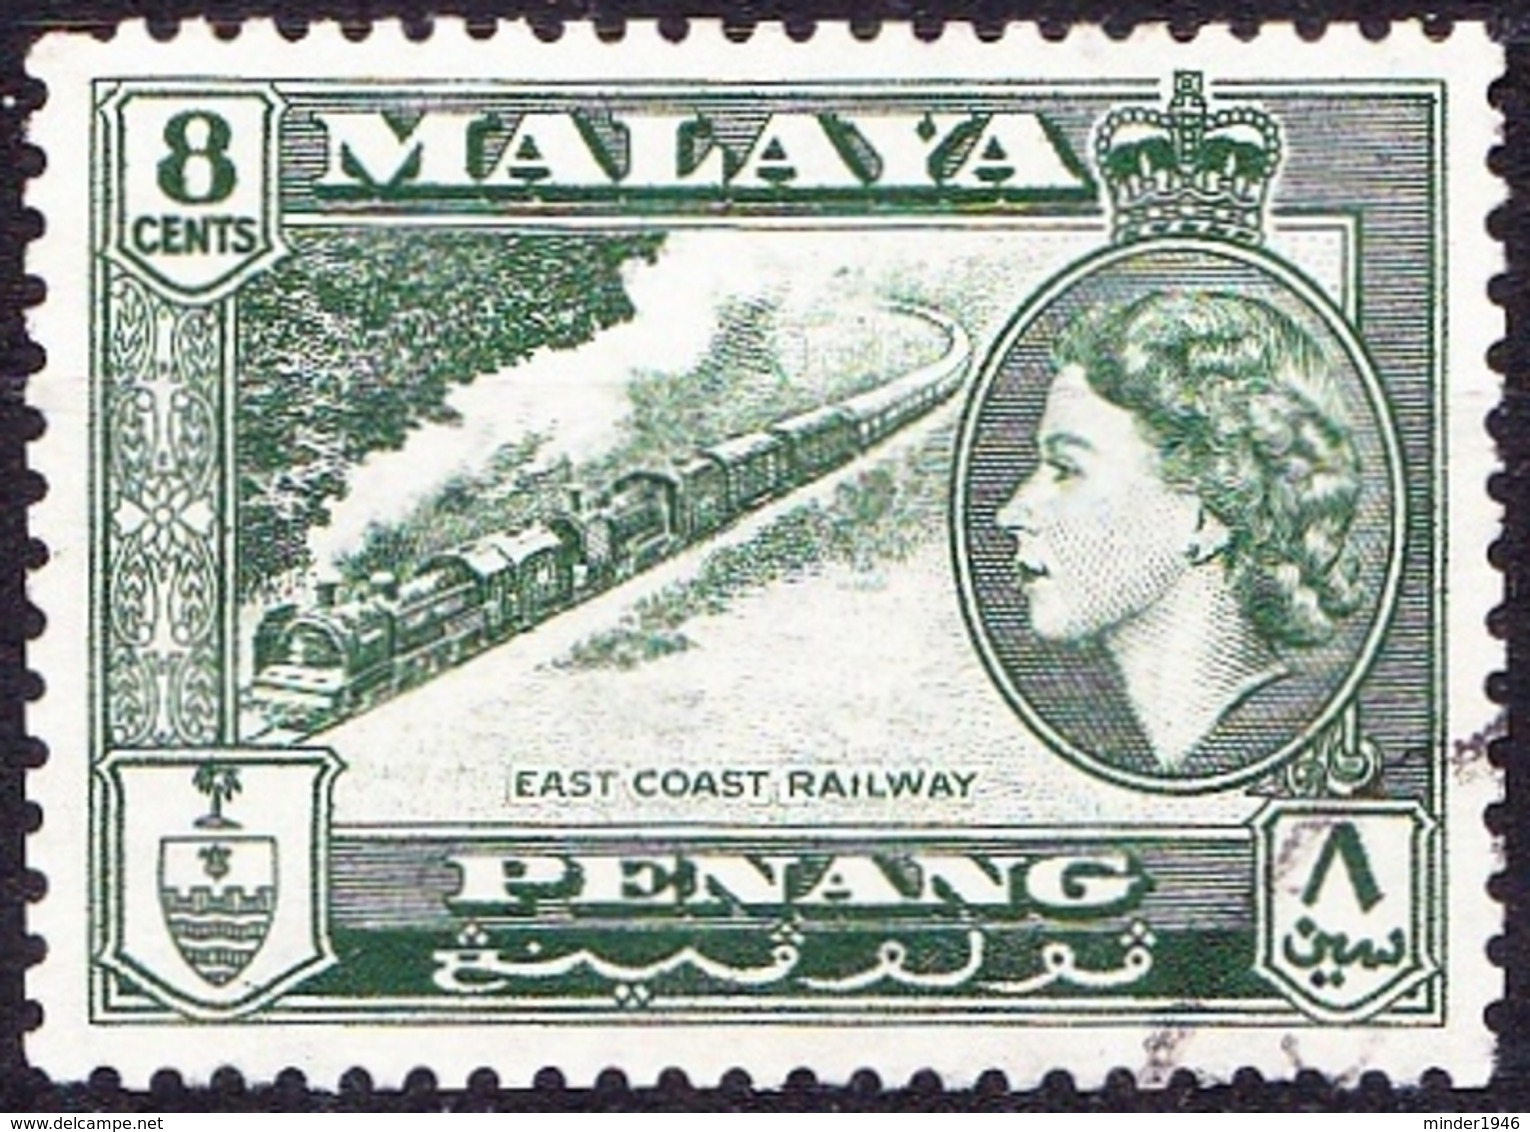 MALAYA PENANG 1957 8c Myrtle-Green SG48 Fine Used - Penang